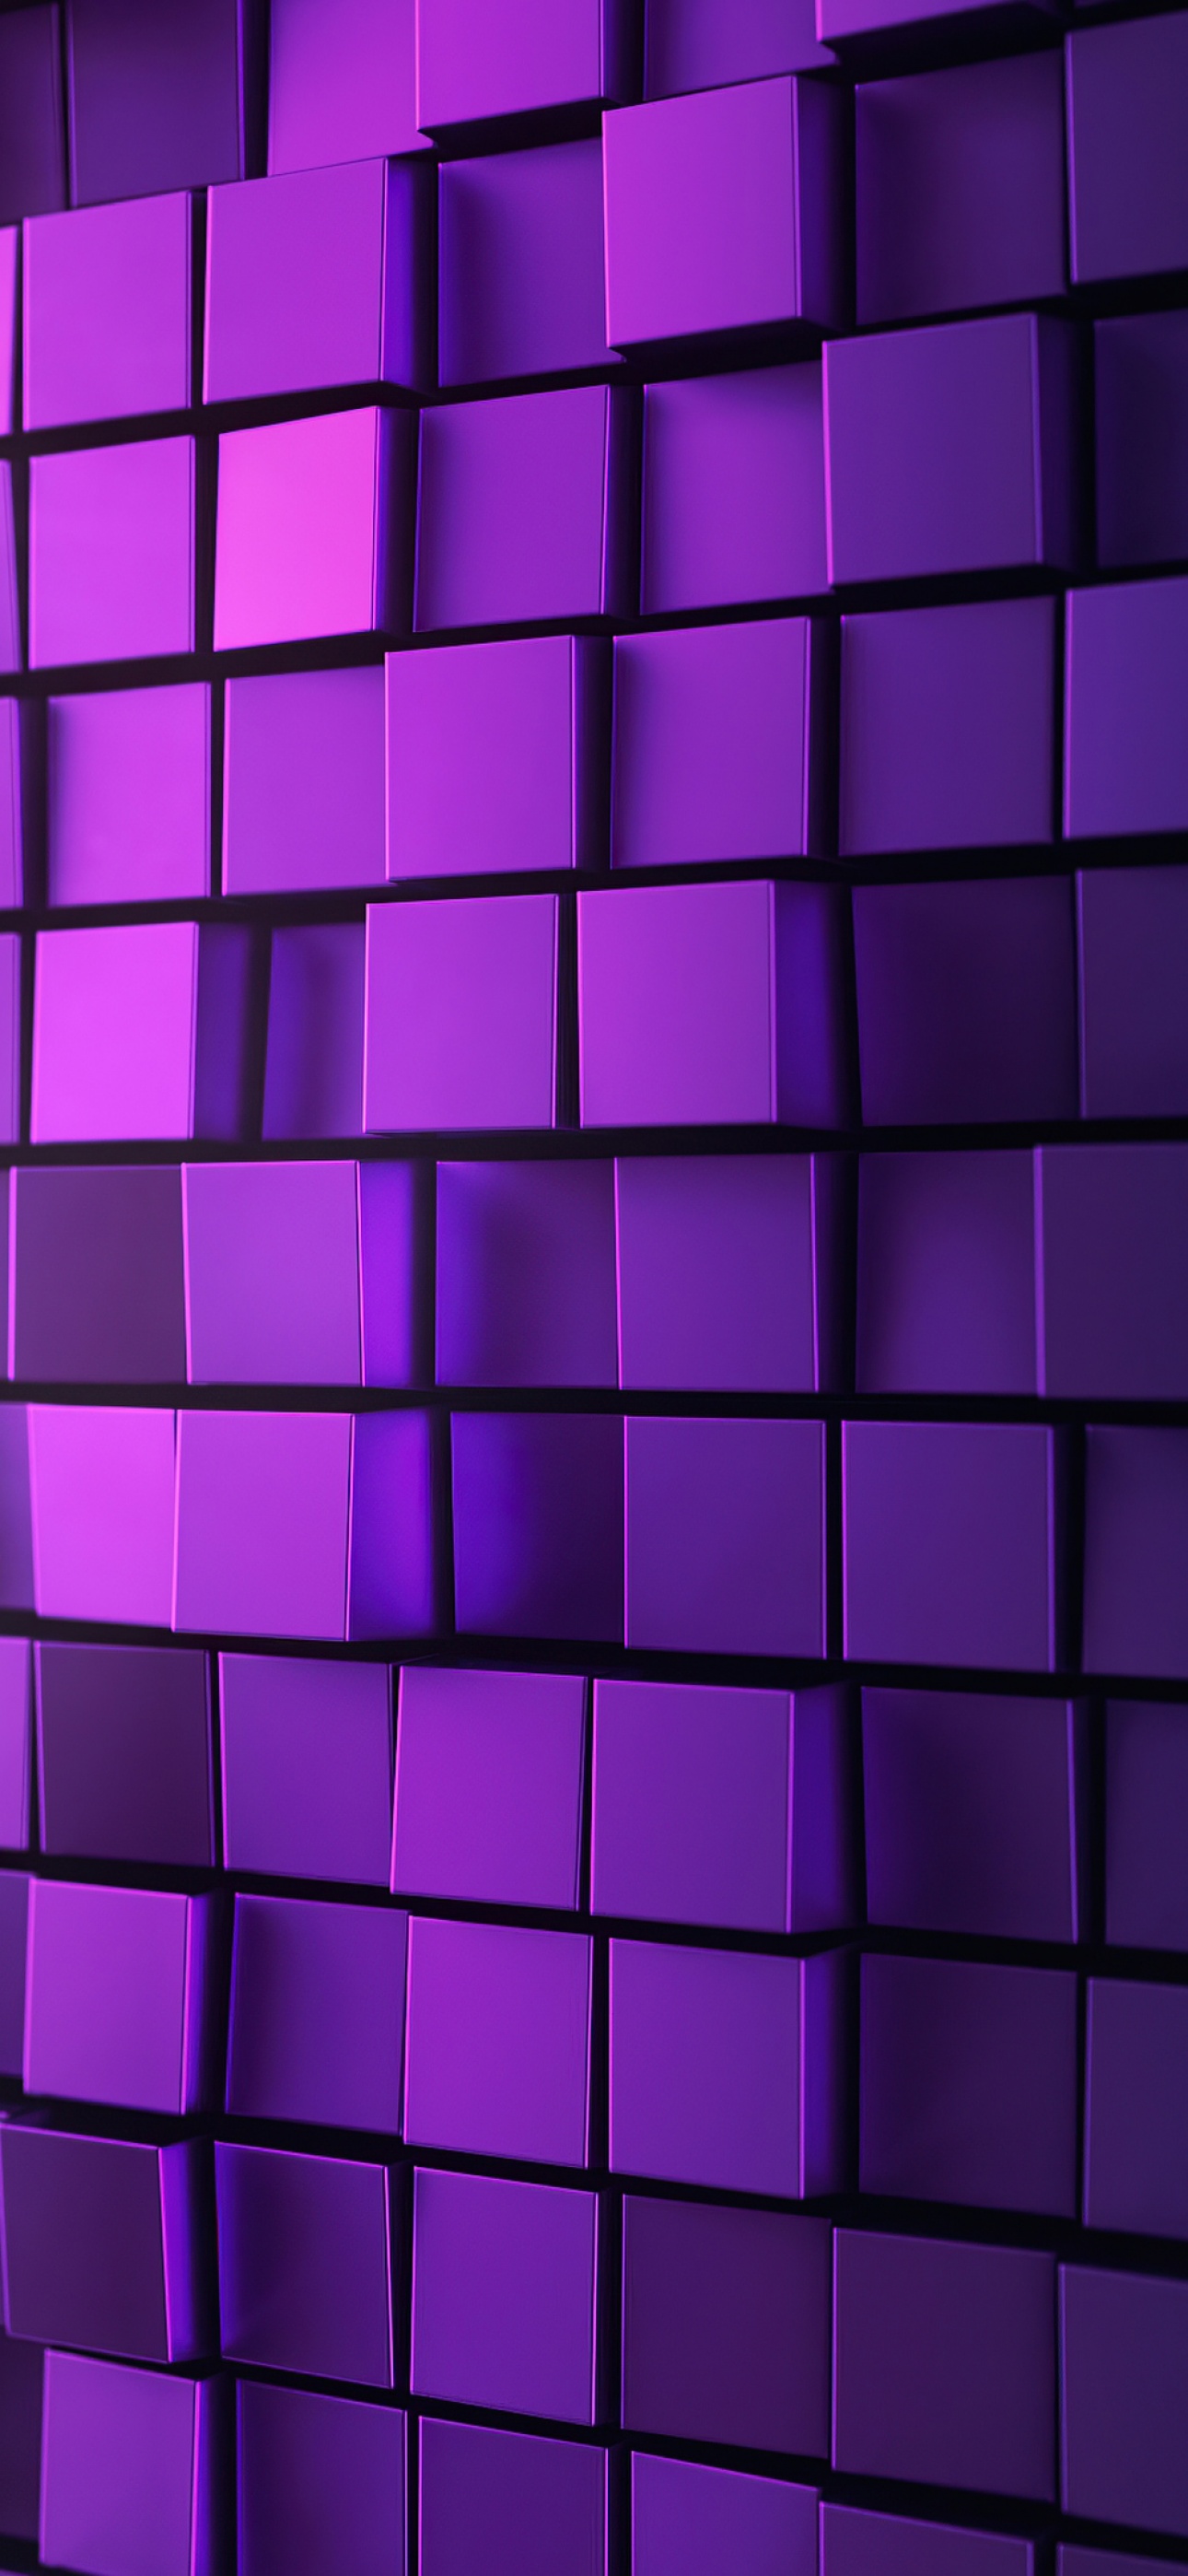 A wall of purple cubes - Violet, purple, pattern, bright, light purple, magenta